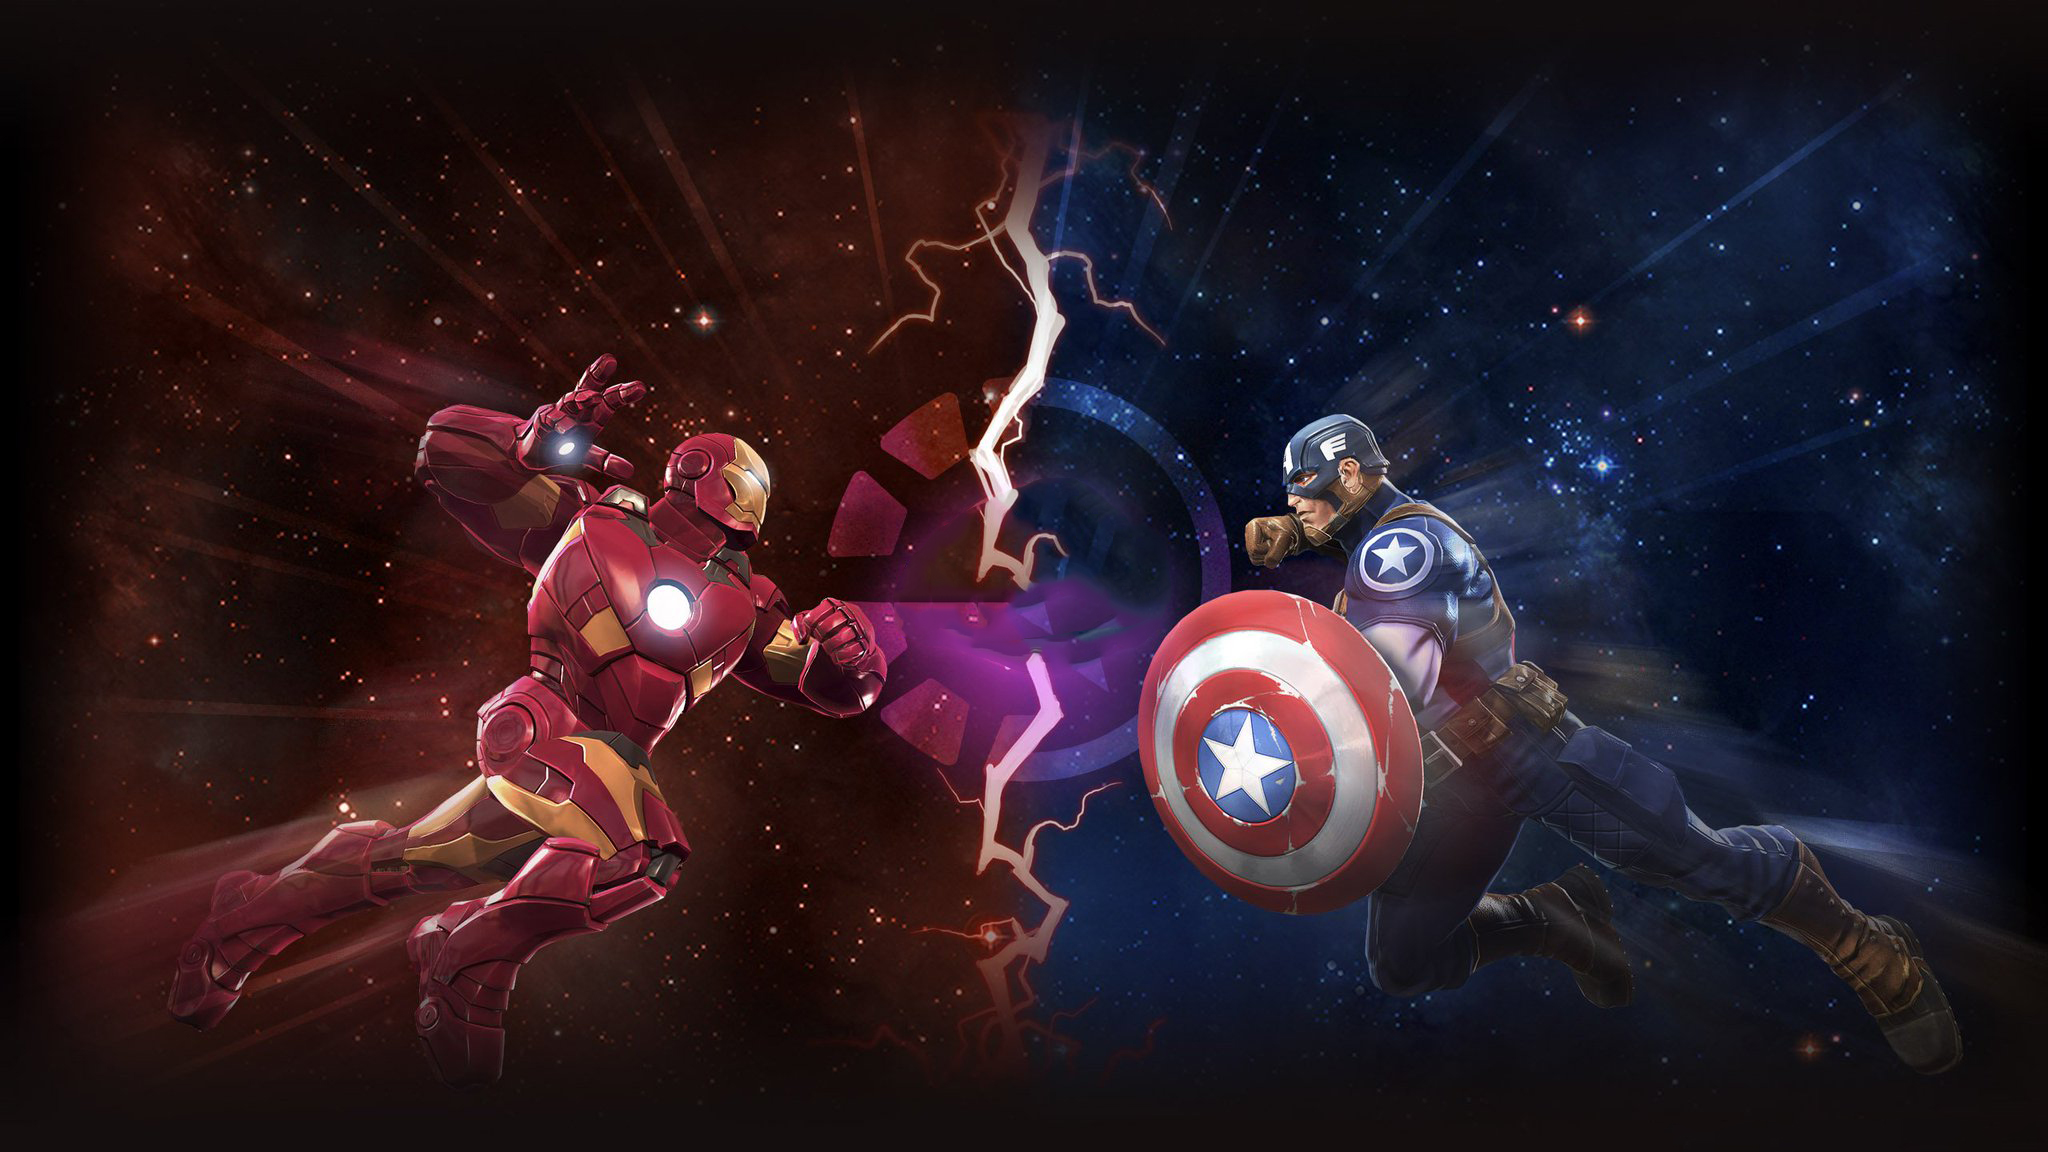 Iron Man vs Captain America Artwork Wallpapers HD Wallpapers